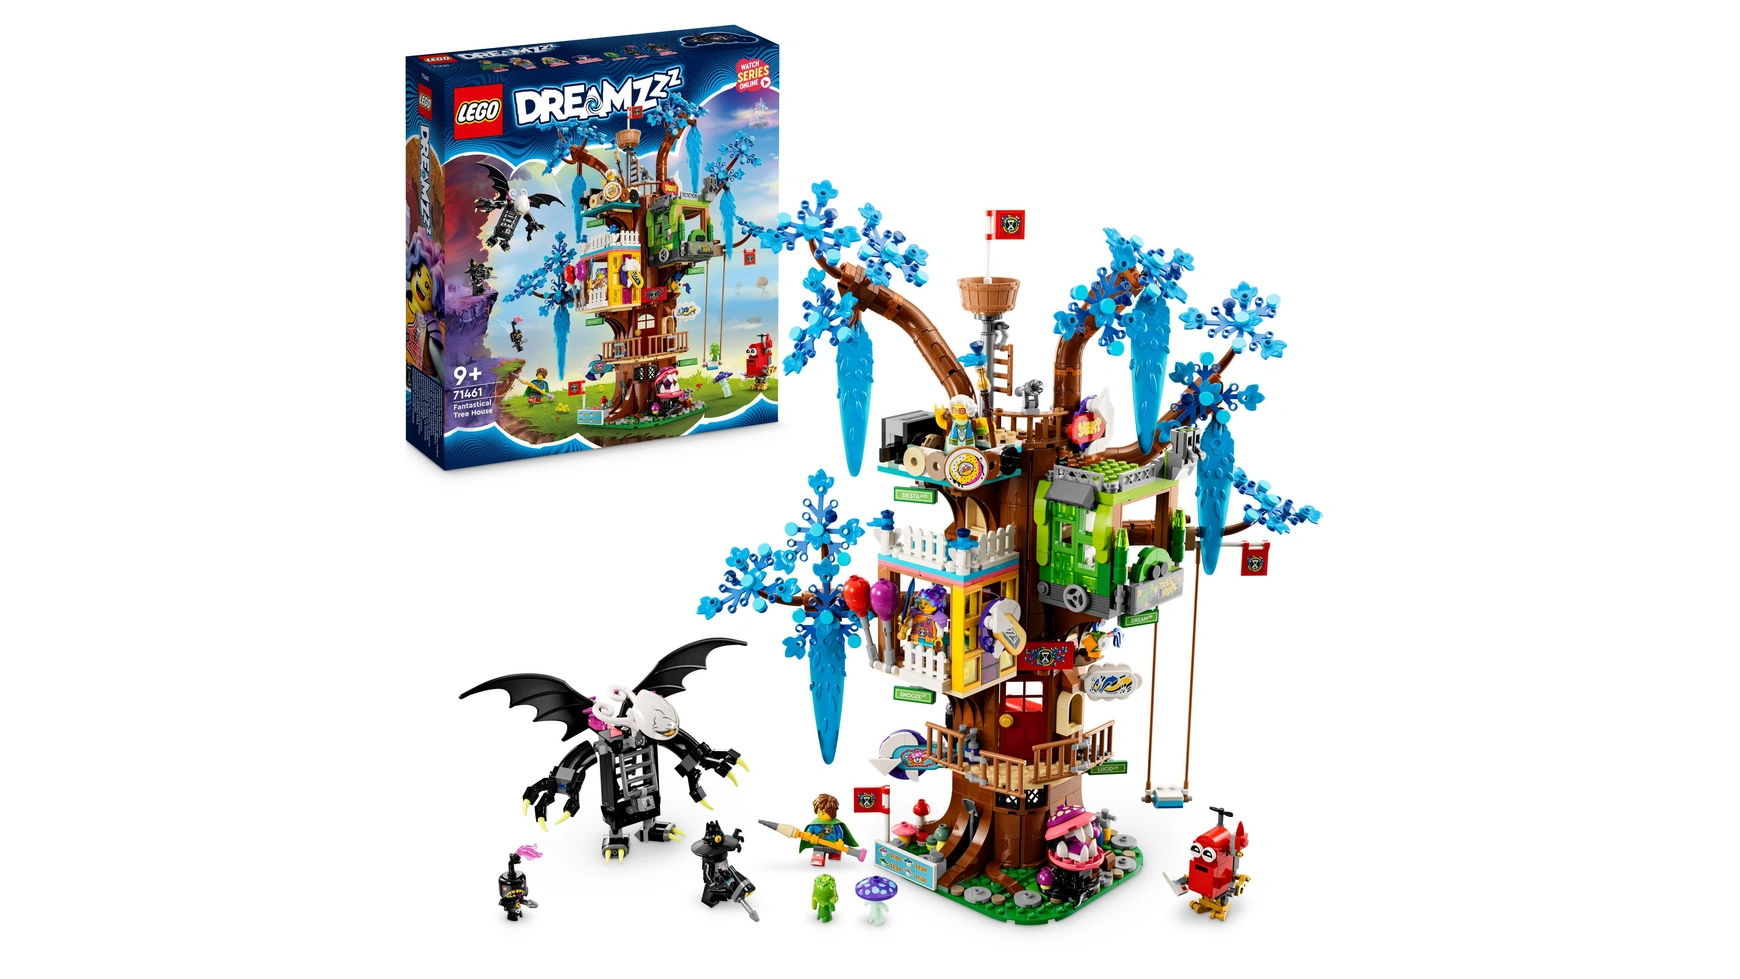 Lego DREAMZzz Фантастический домик на дереве, соберите 2 типа модели конструктор lego disney 43215 волшебный домик на дереве